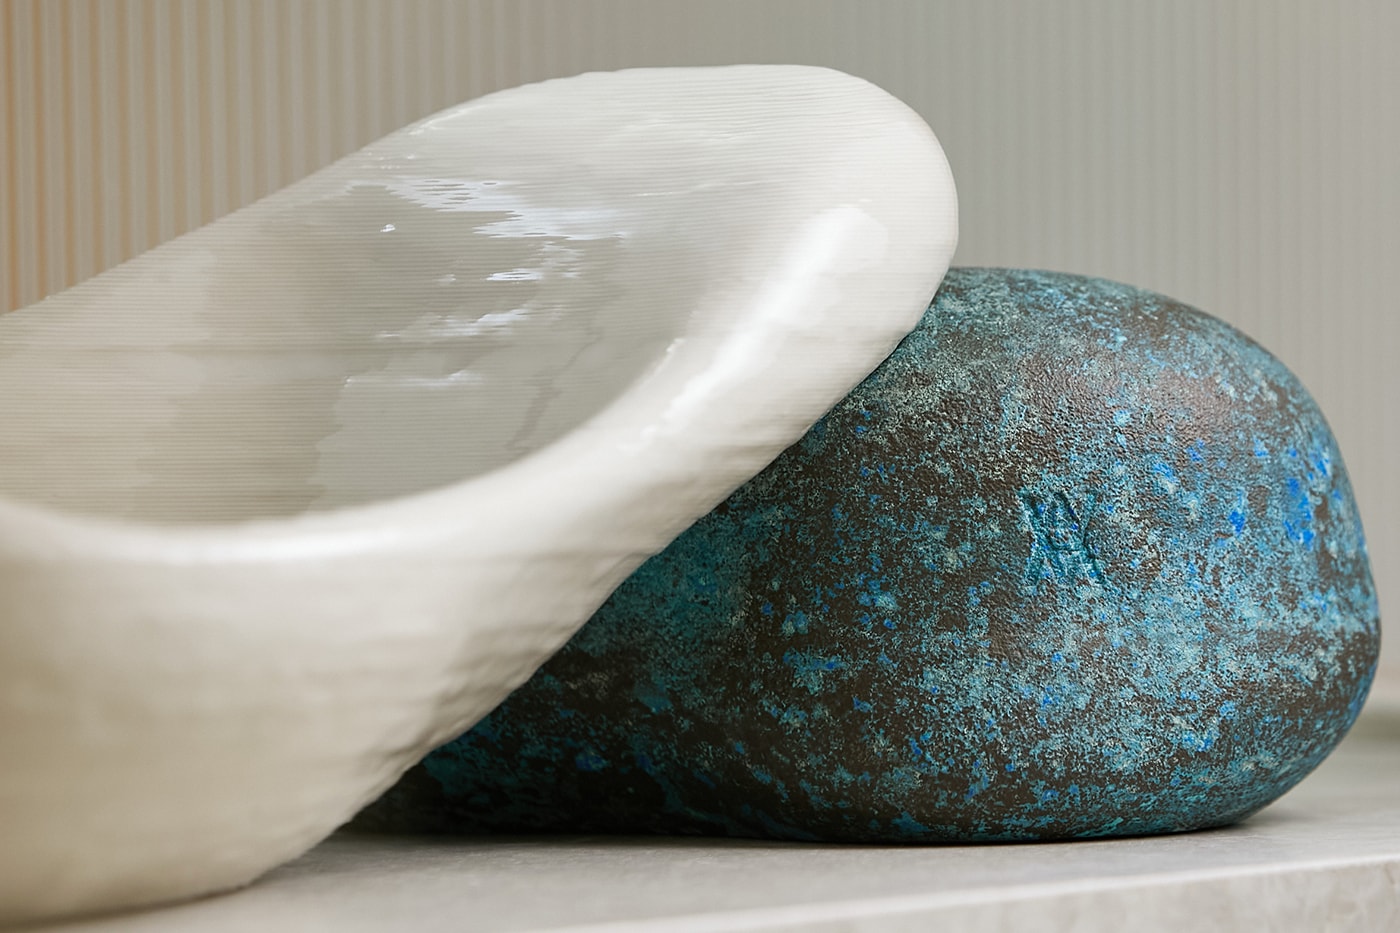 Daniel Arsham Kohler Sink Design Collaboration Rock.01 3-D printed ceramics technology